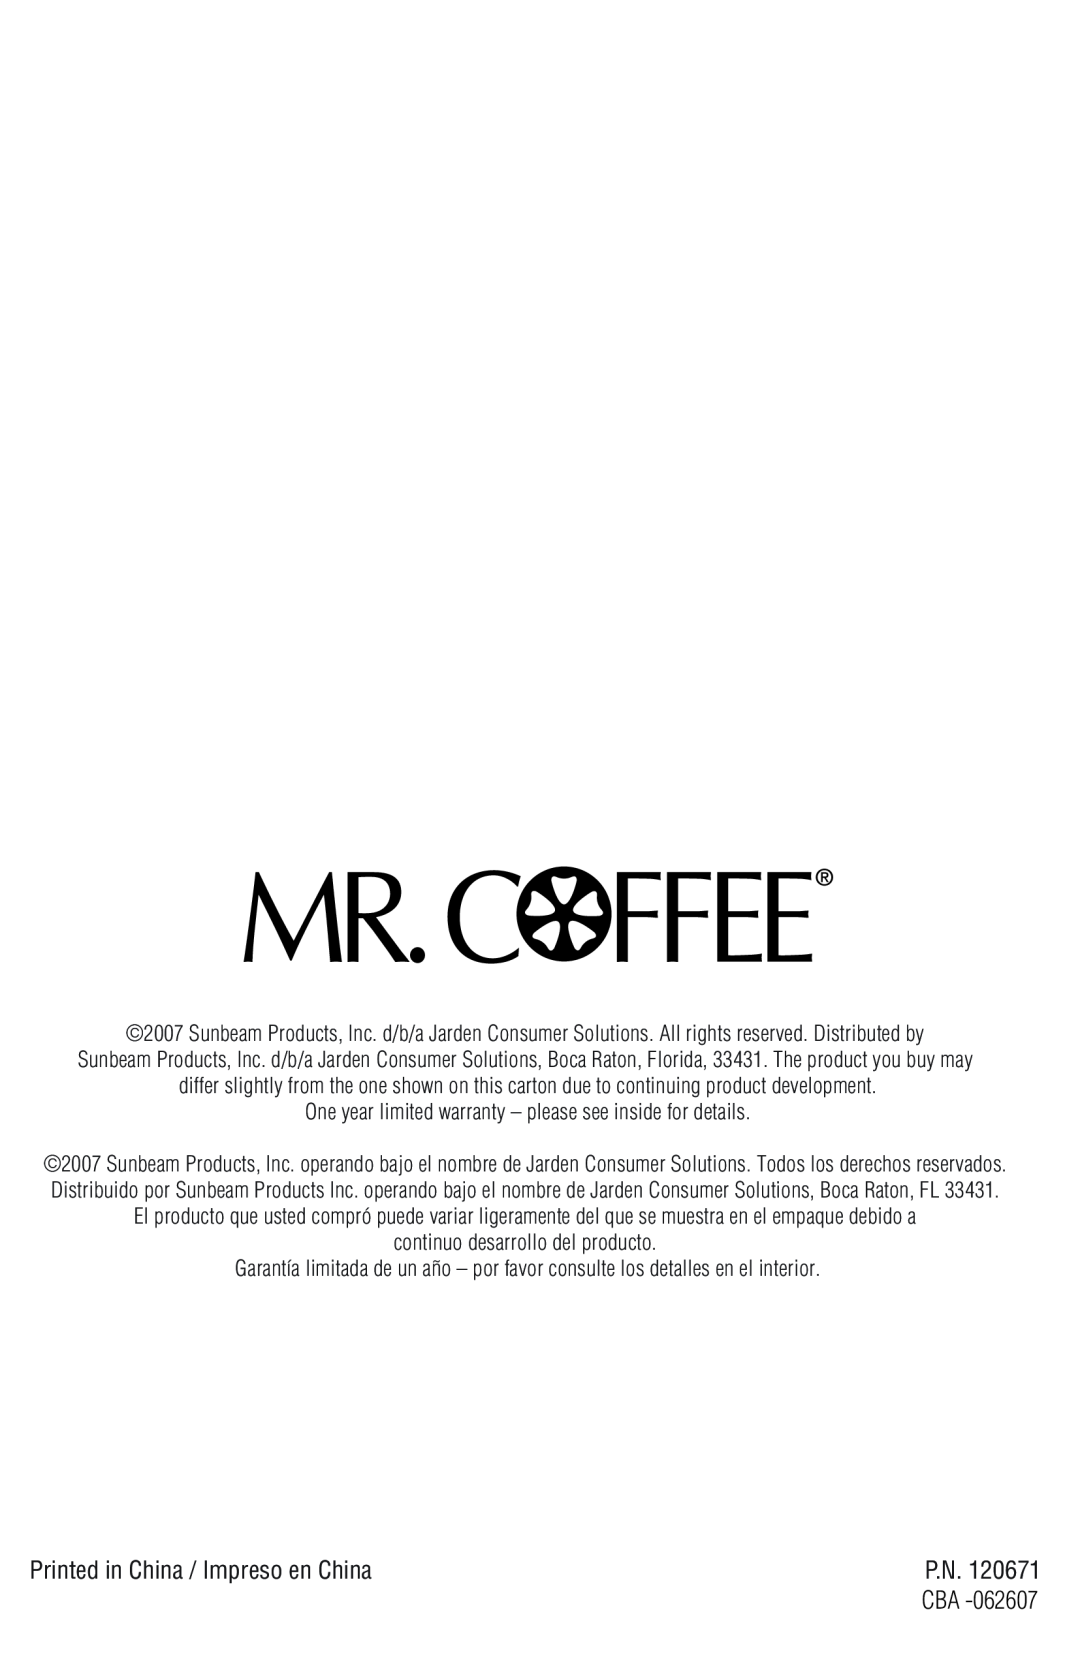 Mr. Coffee ECMP50 One year limited warranty - please see inside for details, continuo desarrollo del producto 